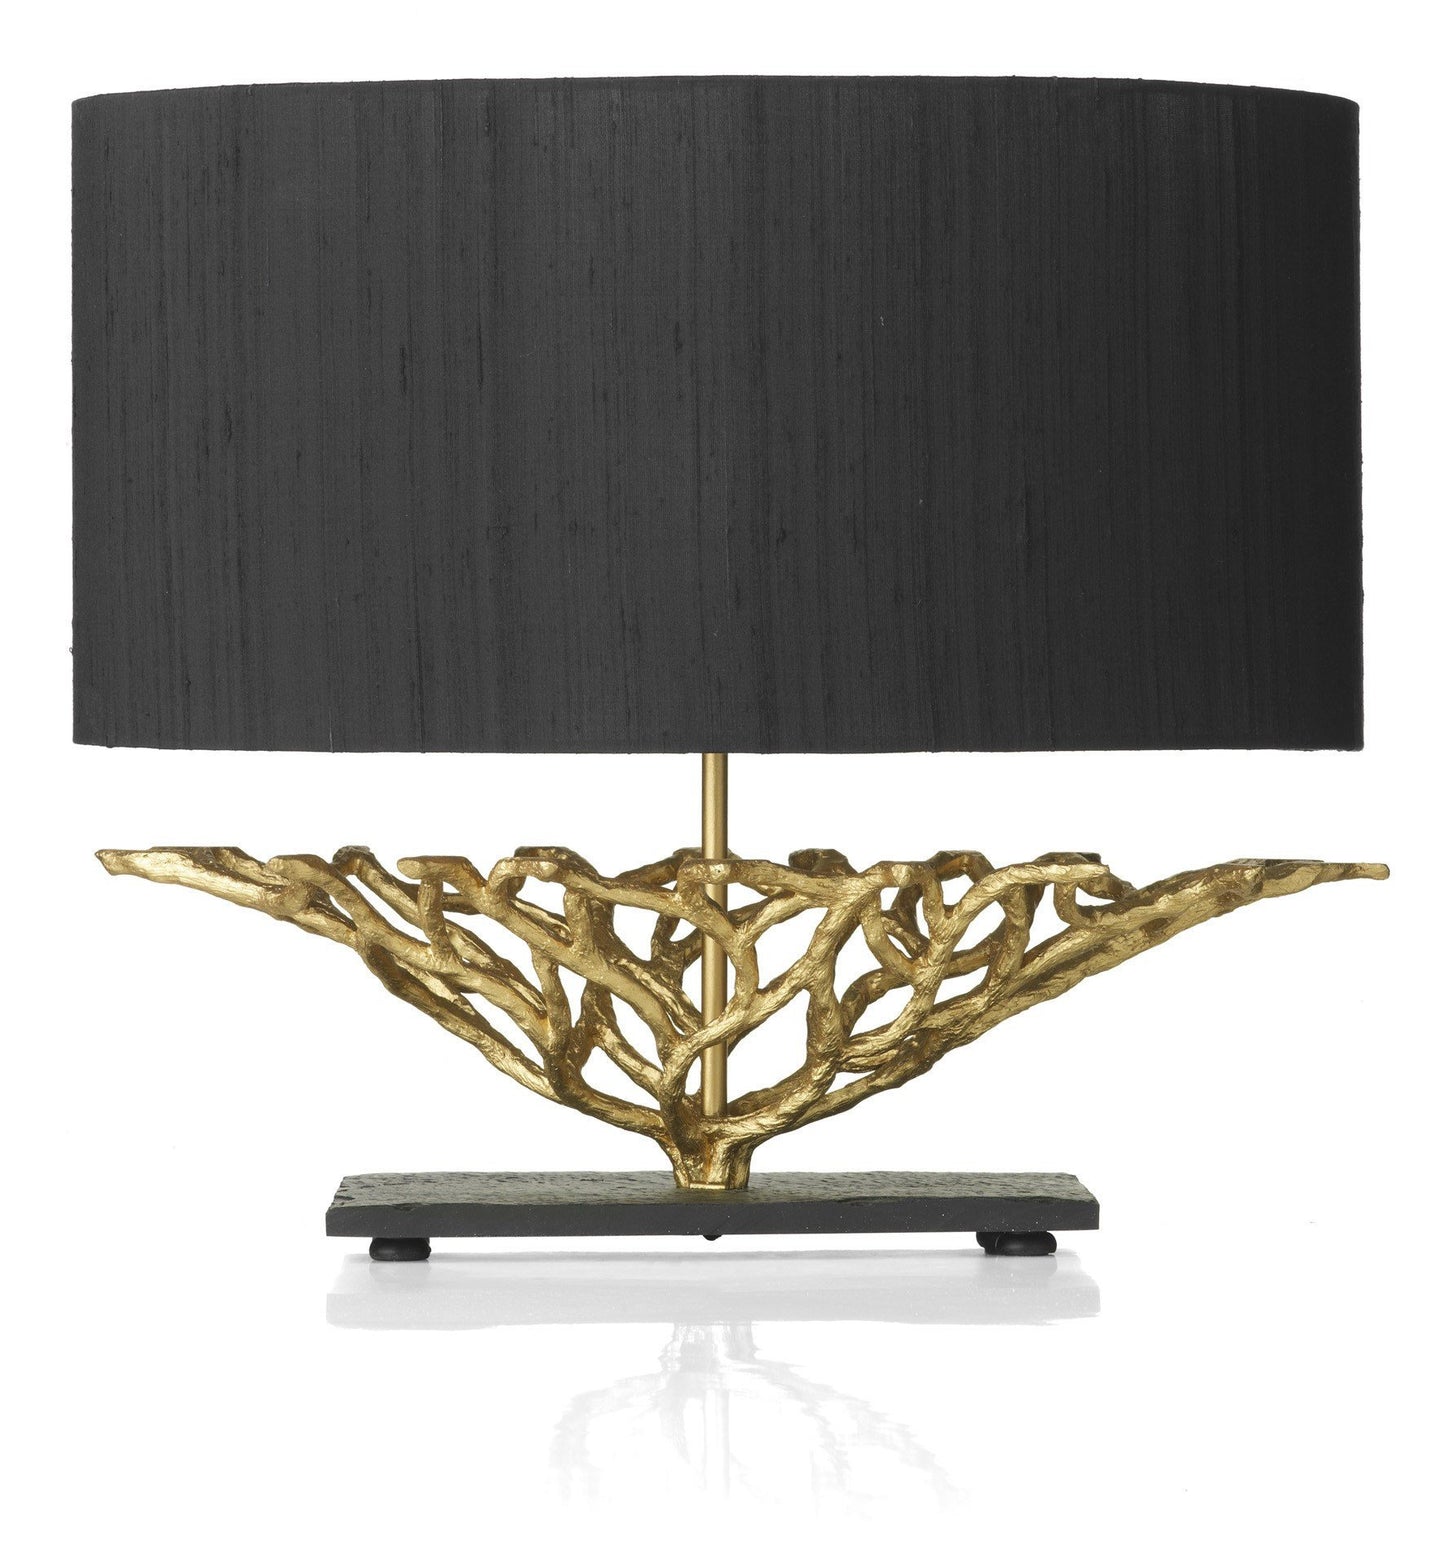 Basket Black and Gold Table Lamp - London Lighting - 1